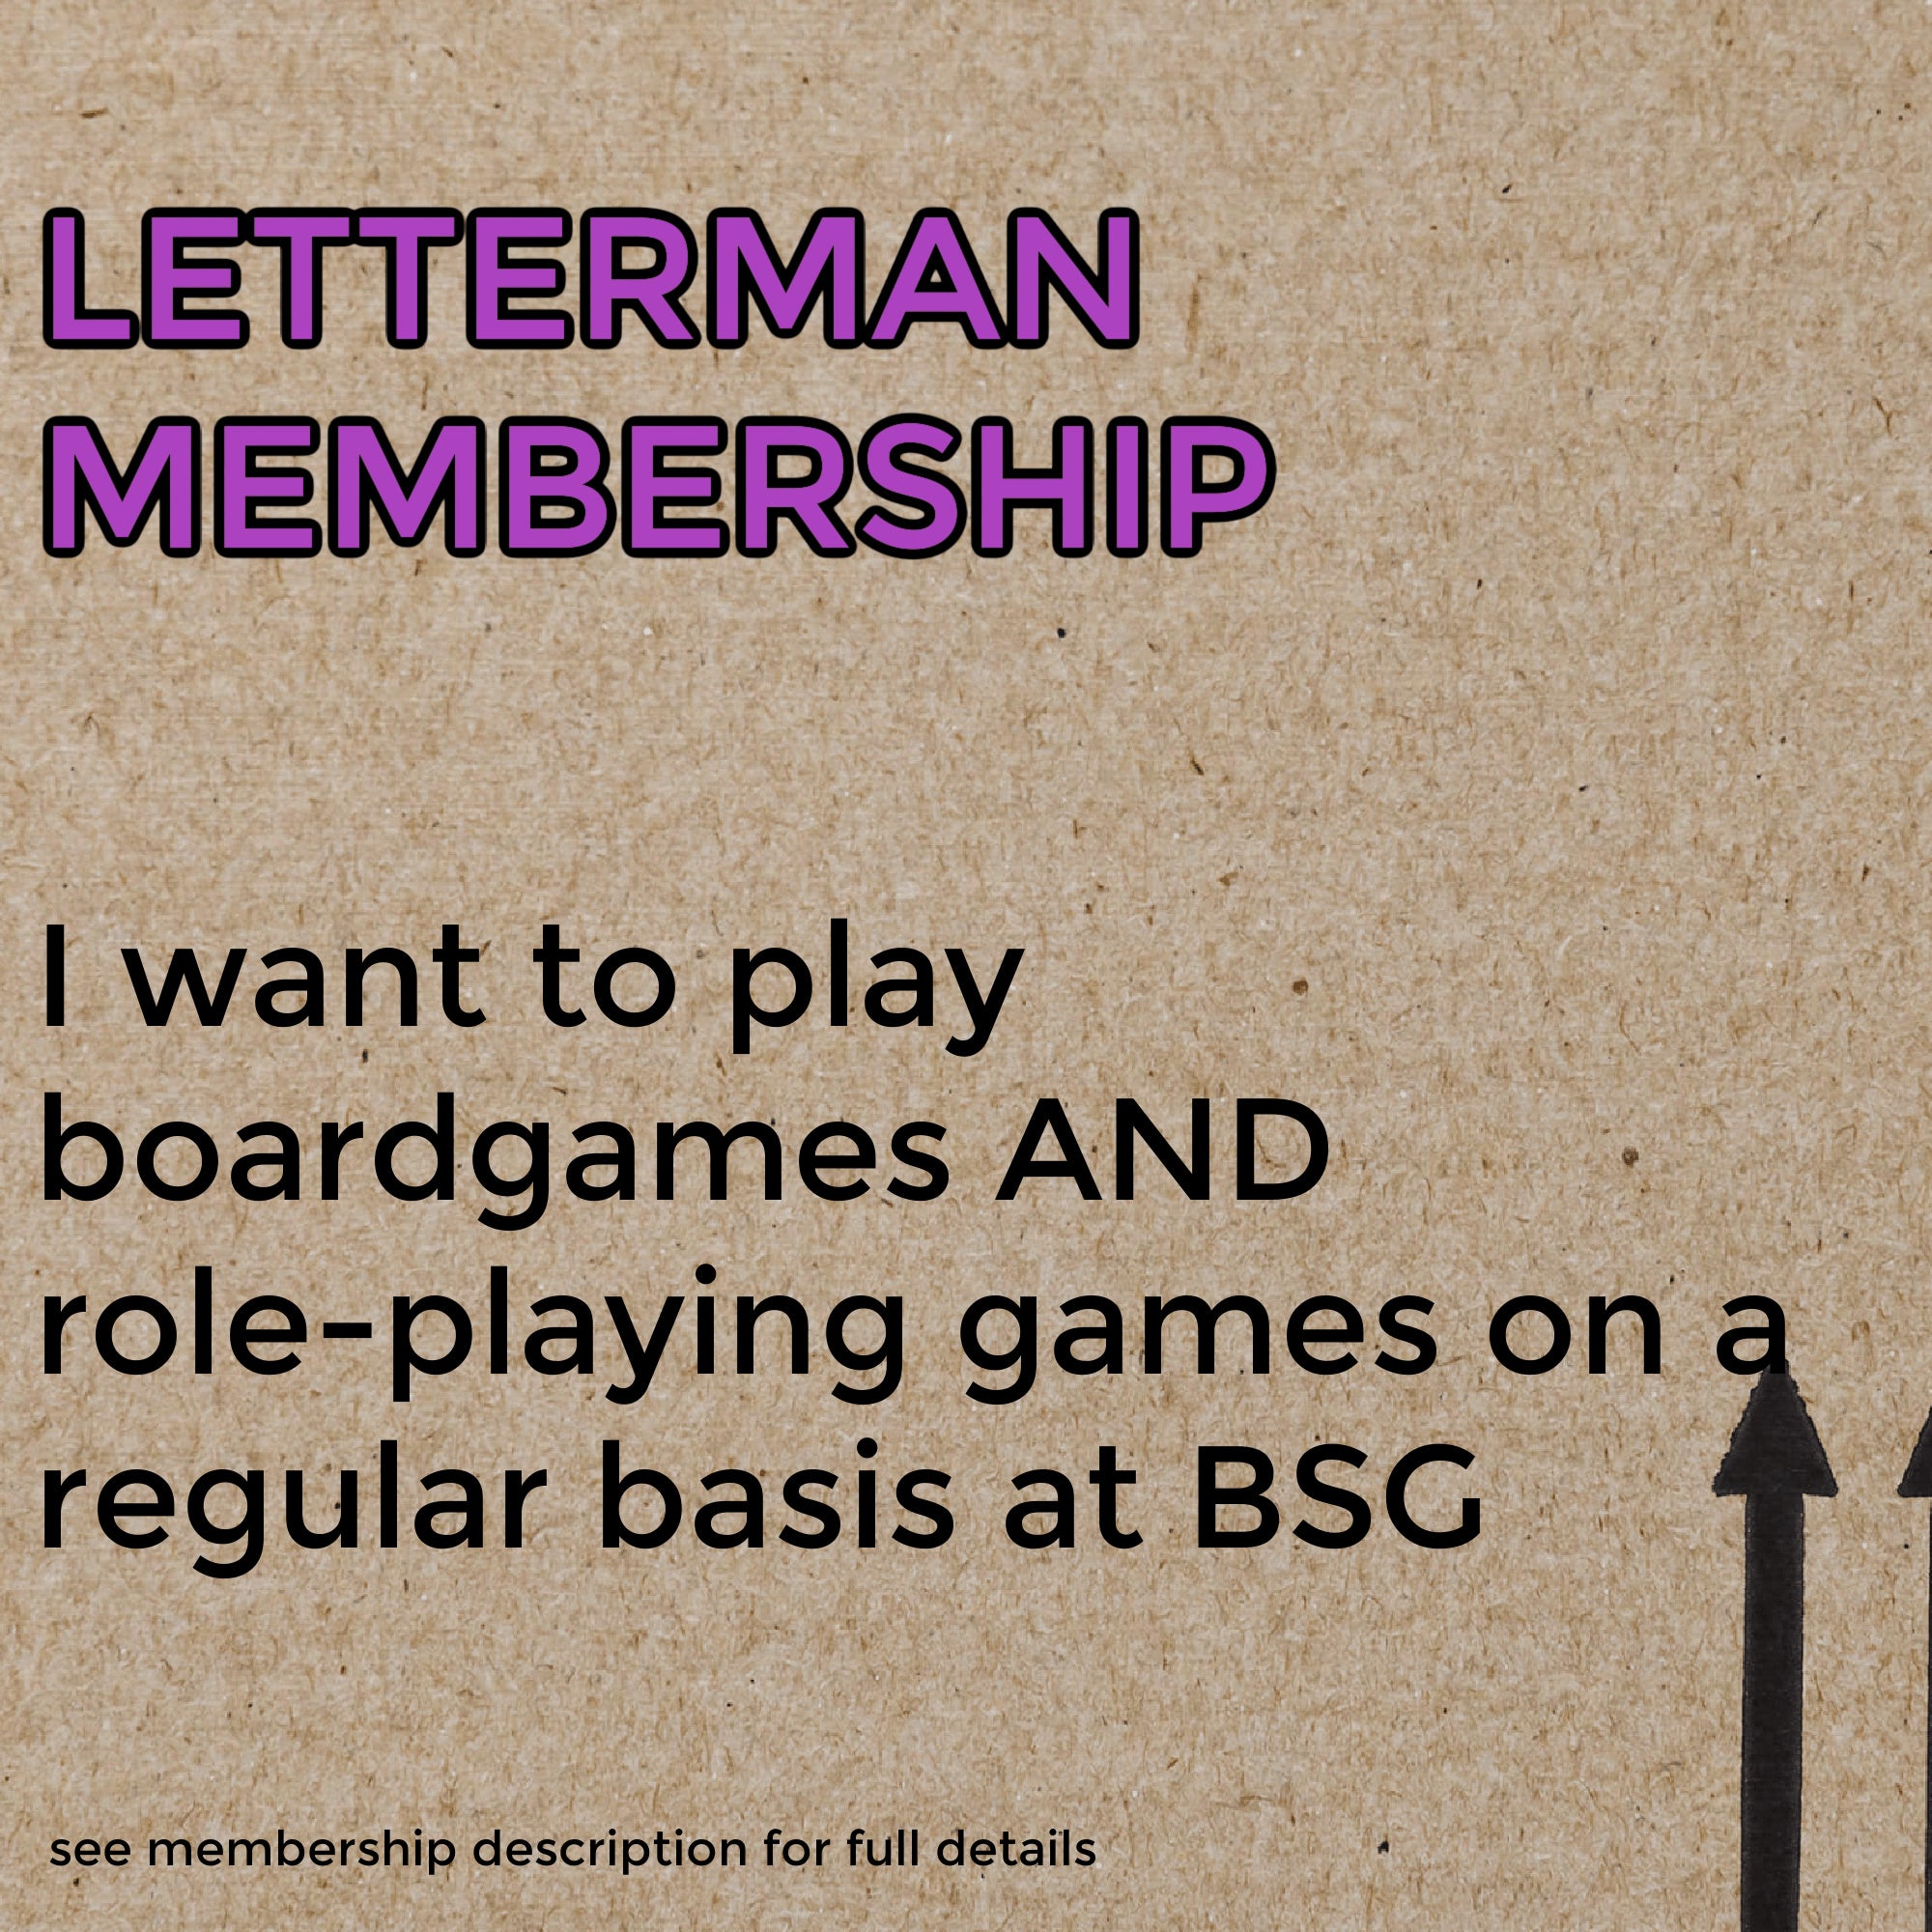 BSG Letterman Membership